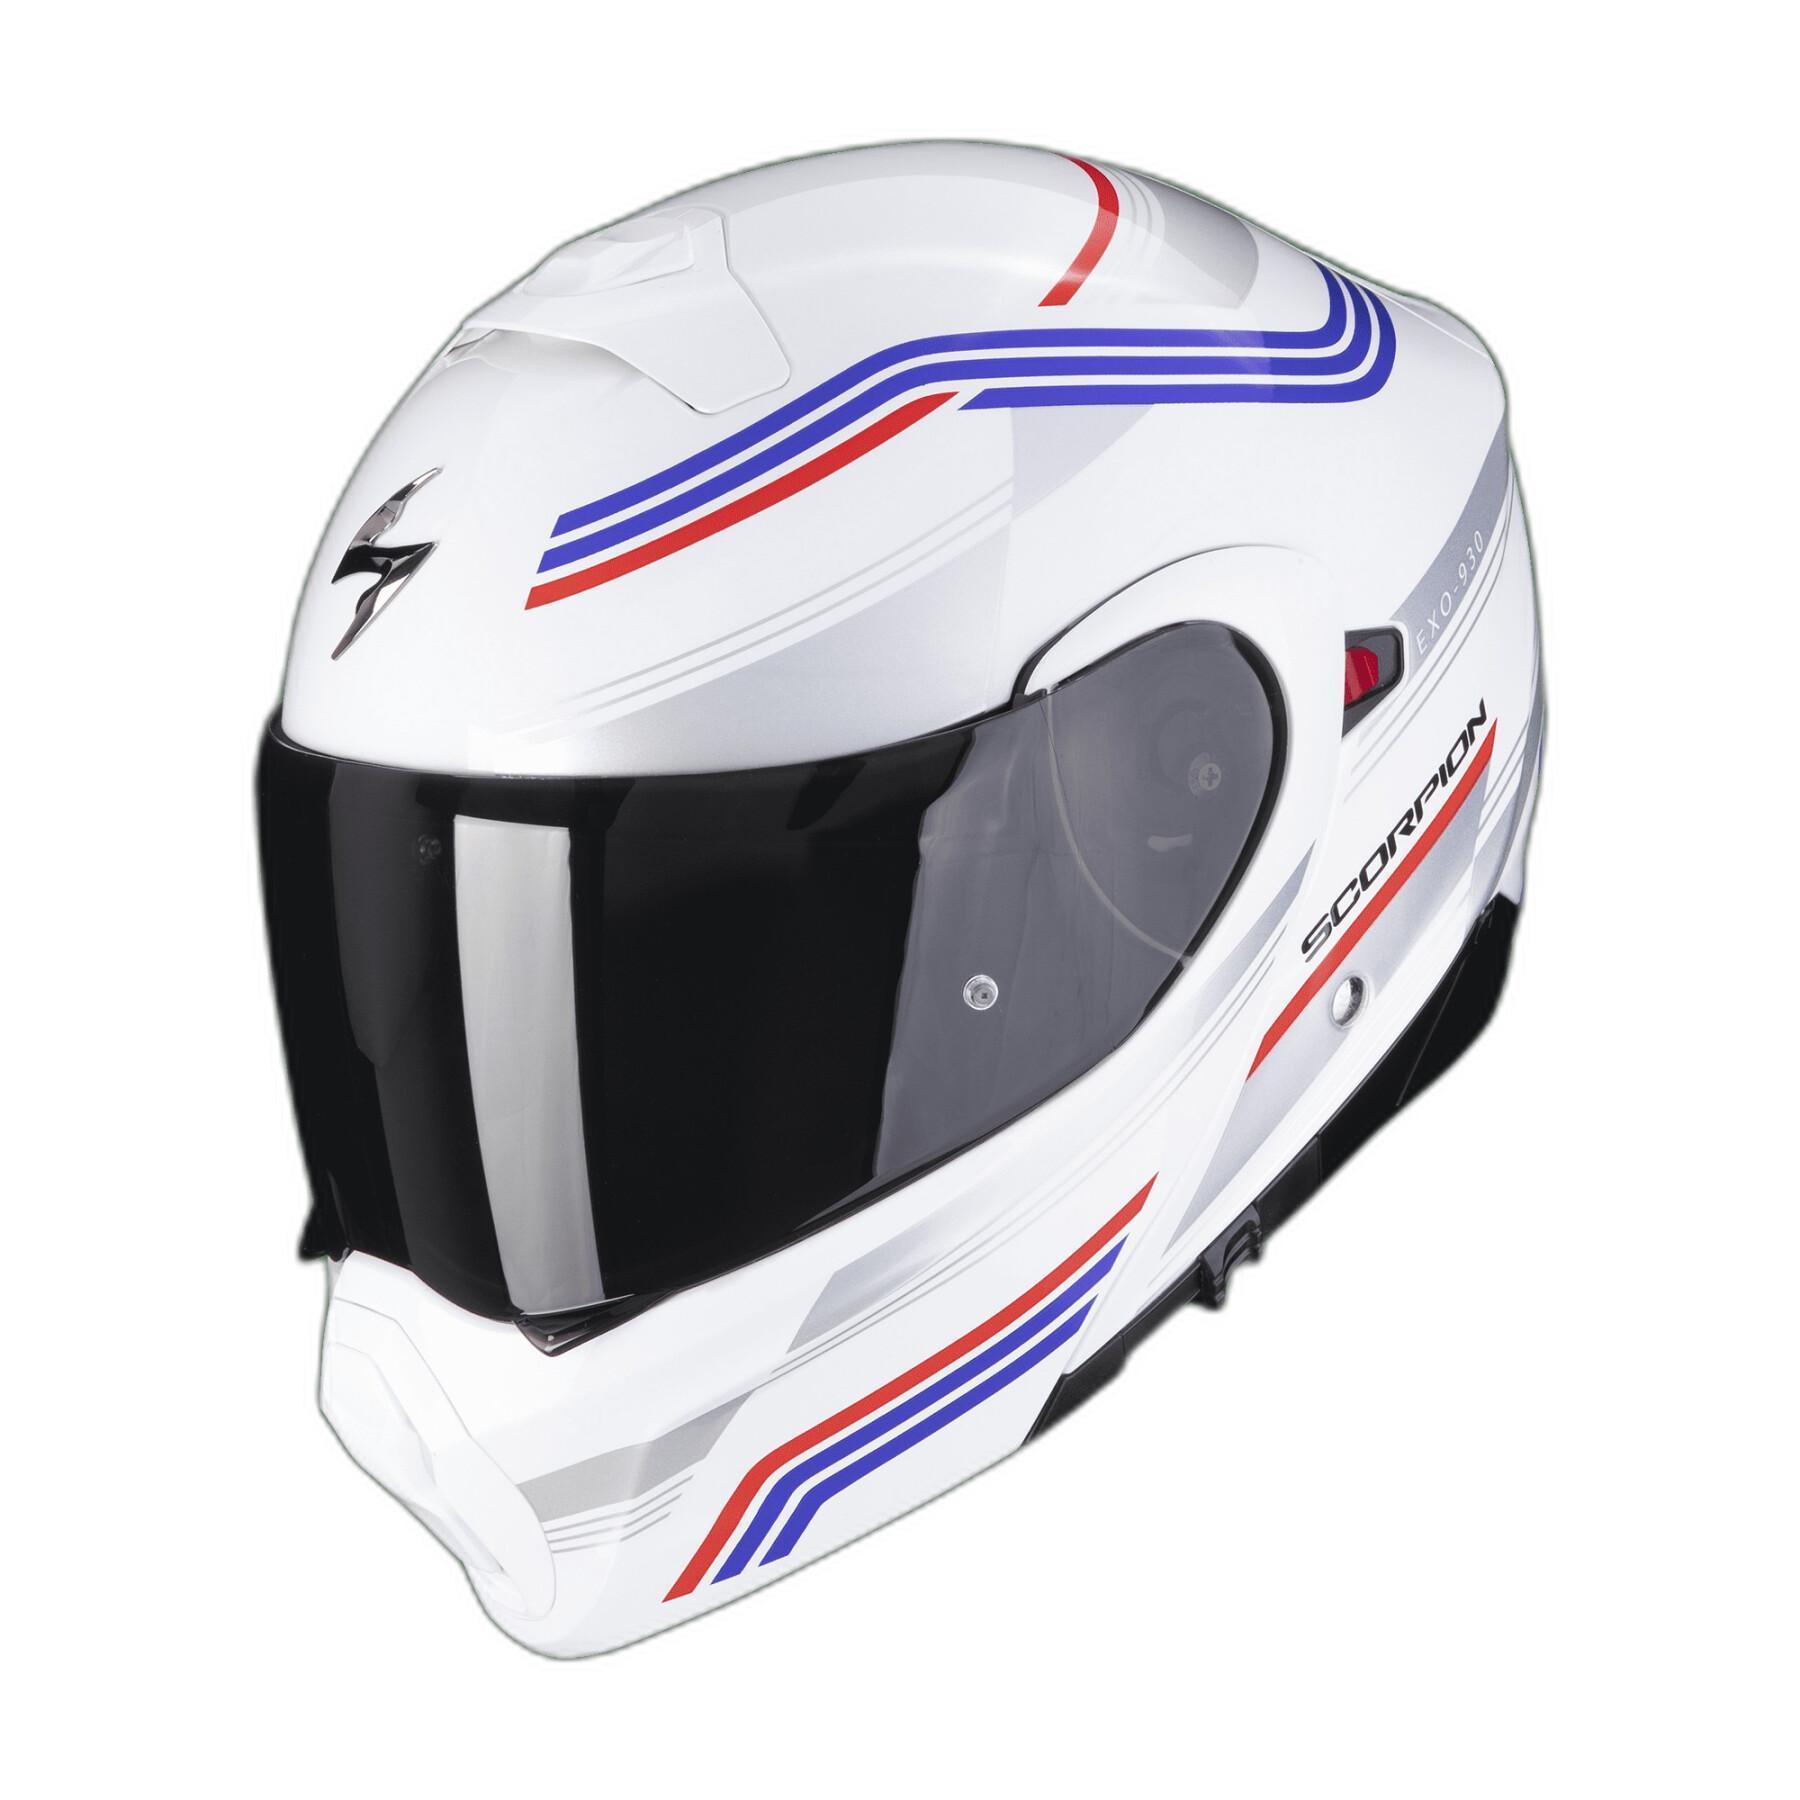 Full face motorcycle helmet Scorpion Exo-930 Multi